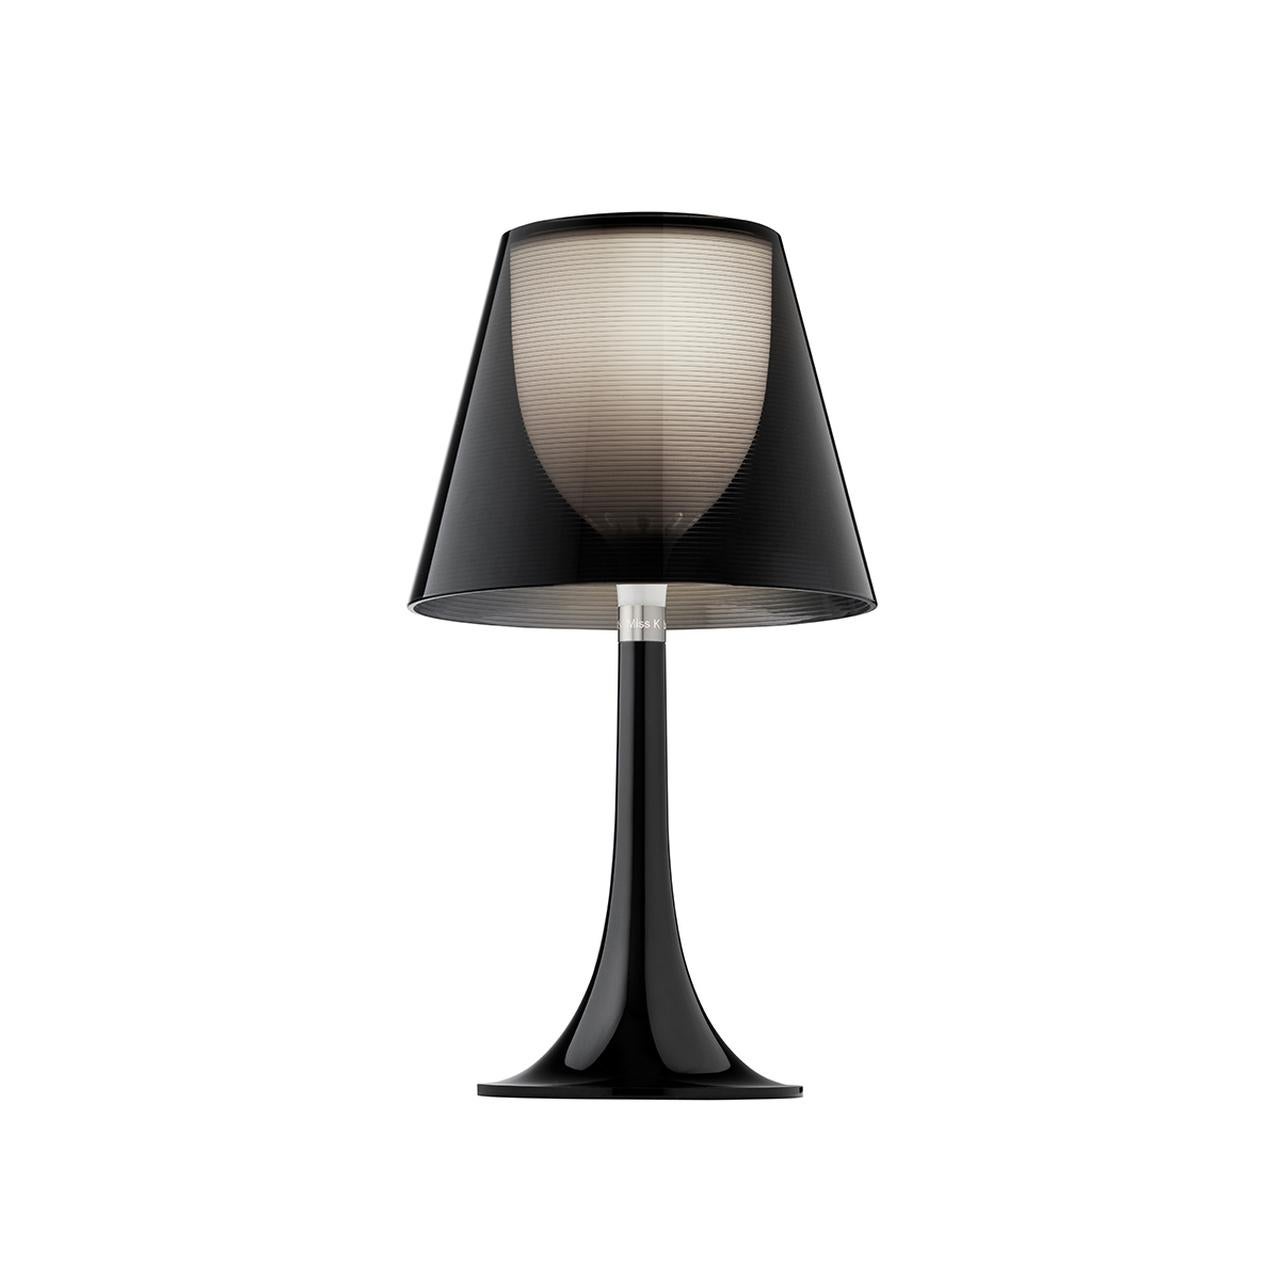 Flos Miss K Table Lamp in Fummee by Philippe Starck